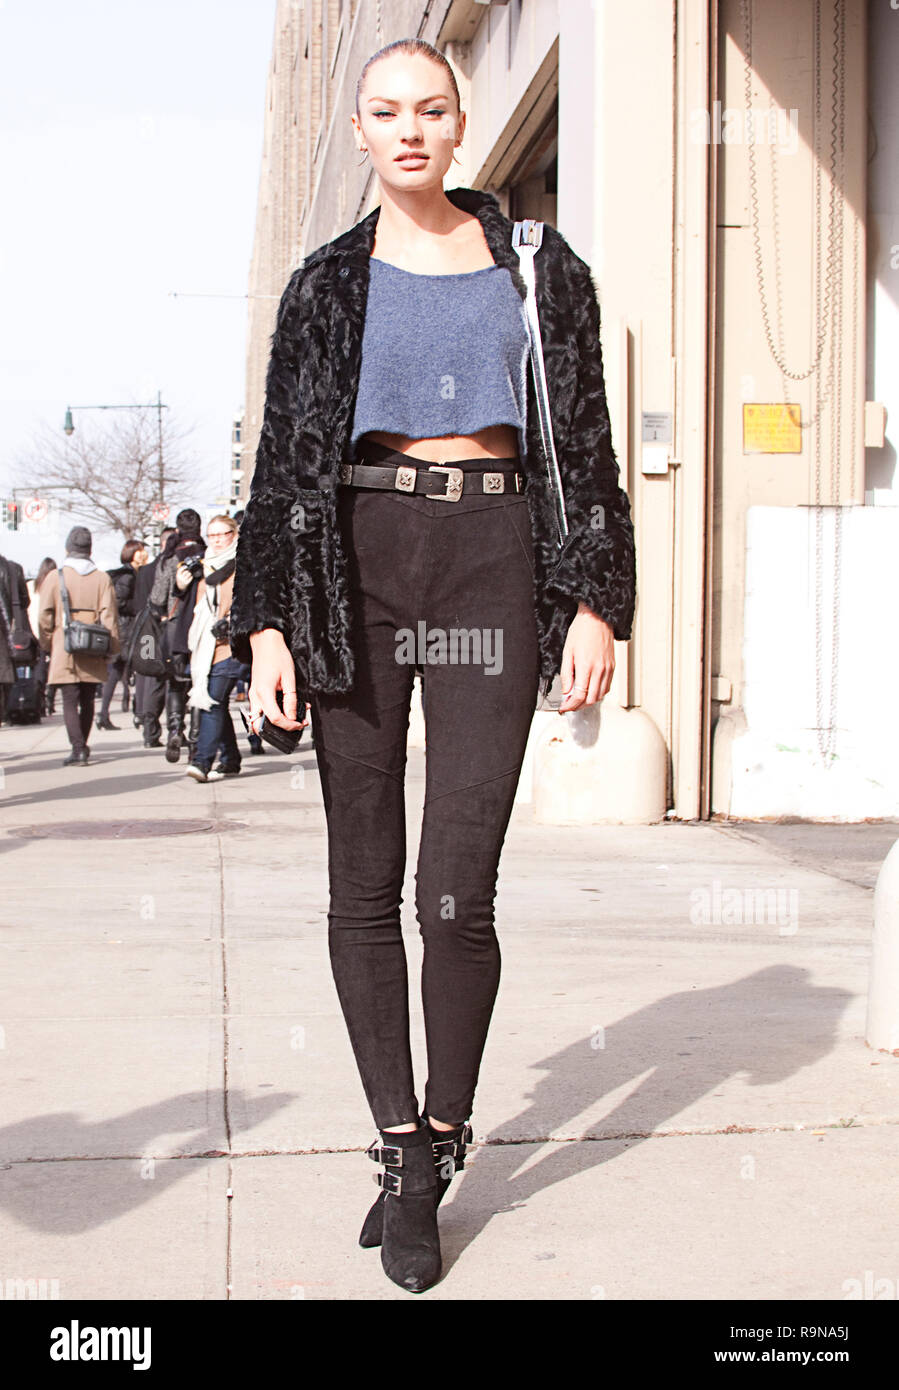 Fashion model street style during new york fashion week Stock Photo - Alamy